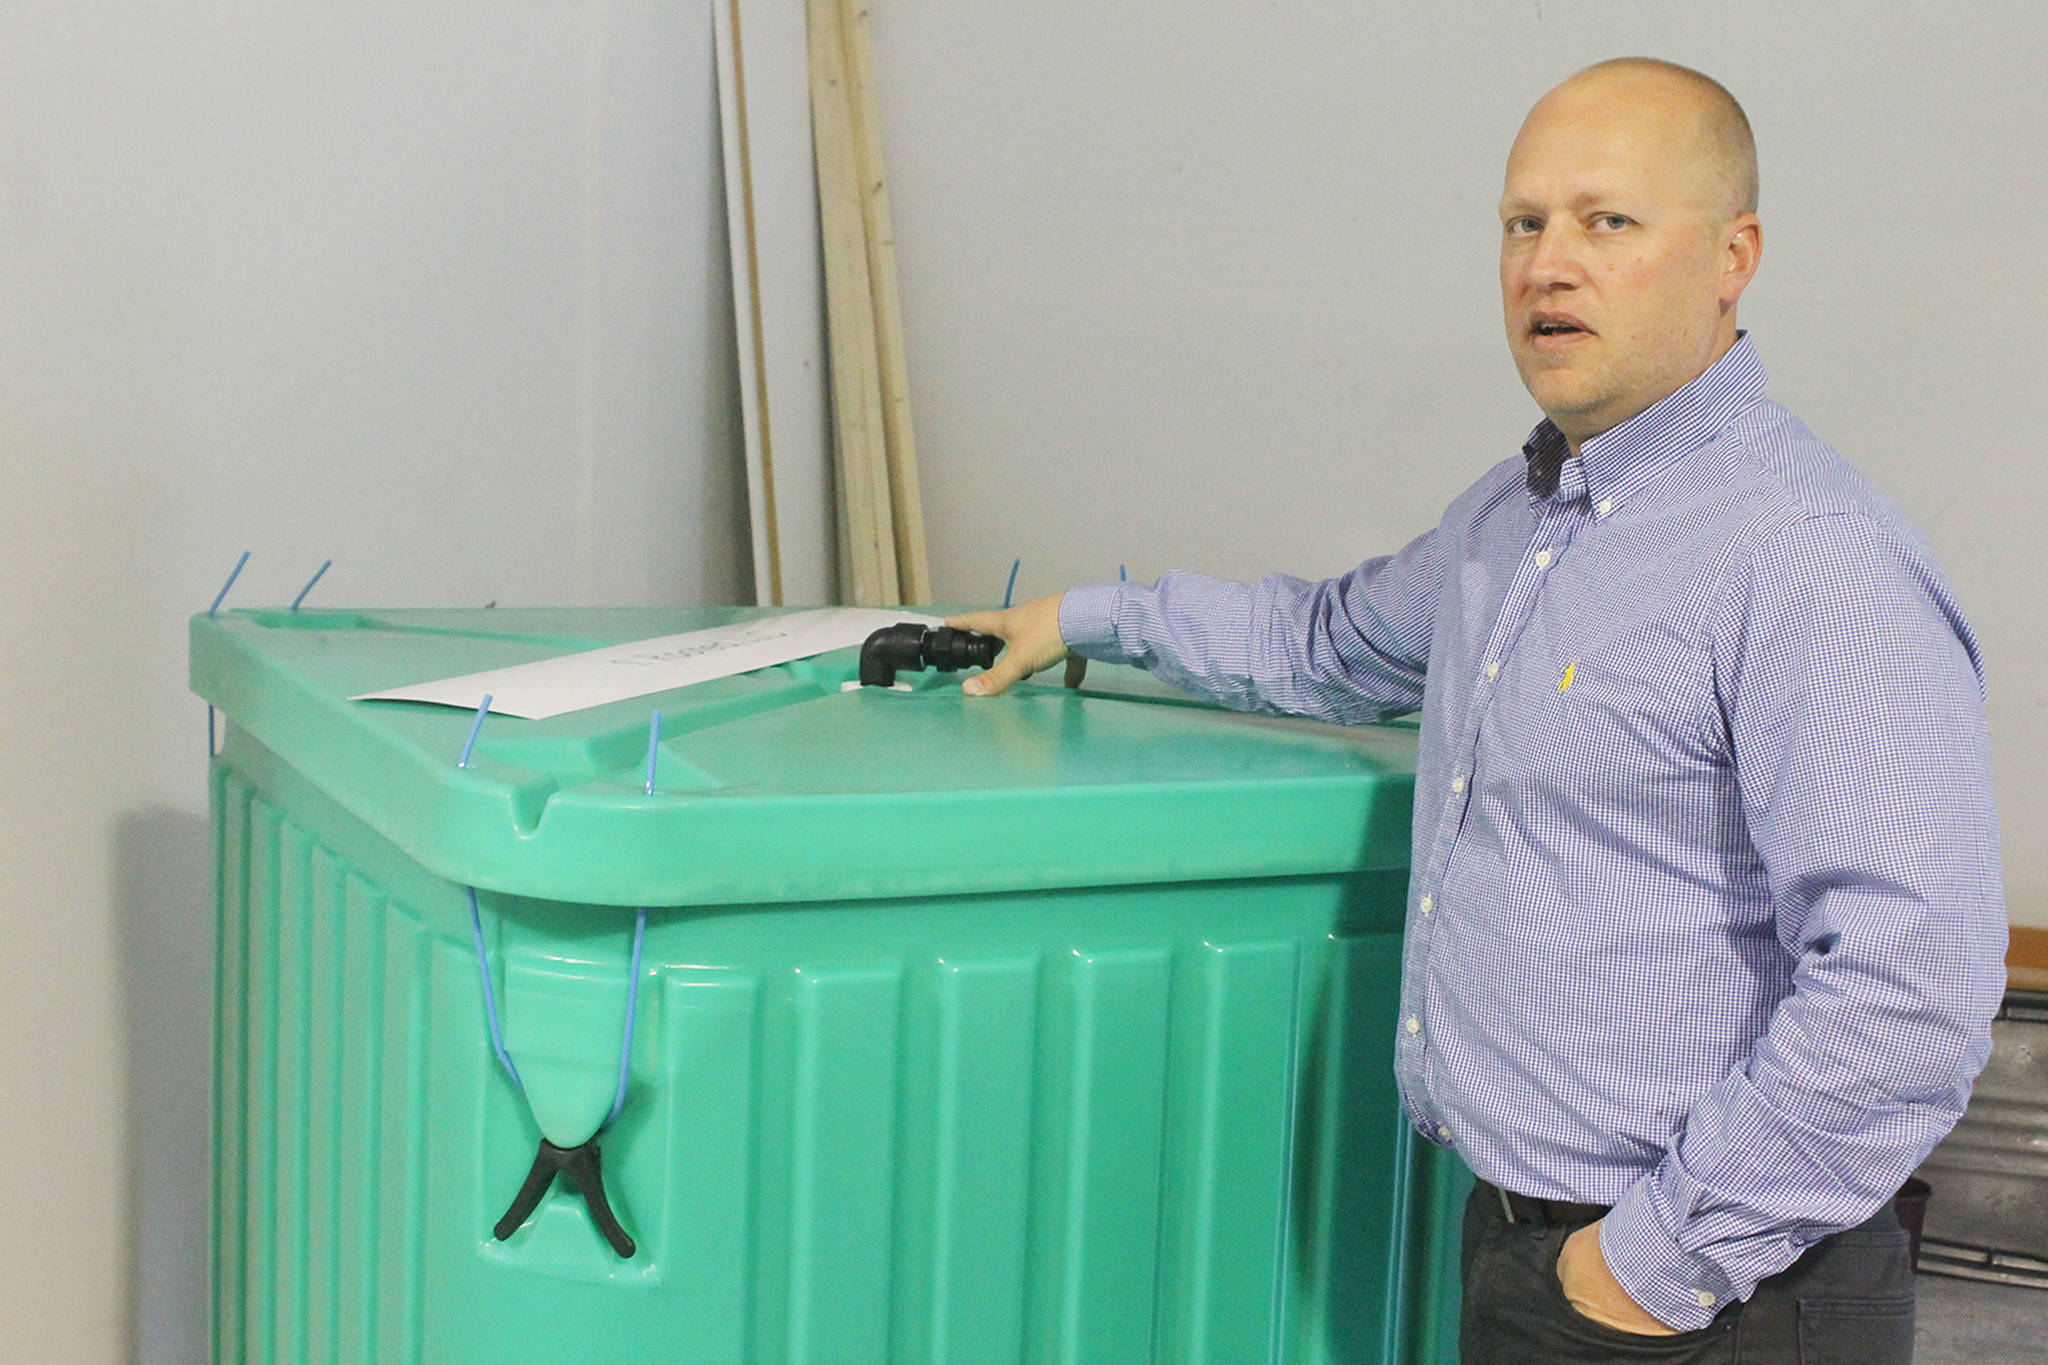 Island man grows pet composting biz